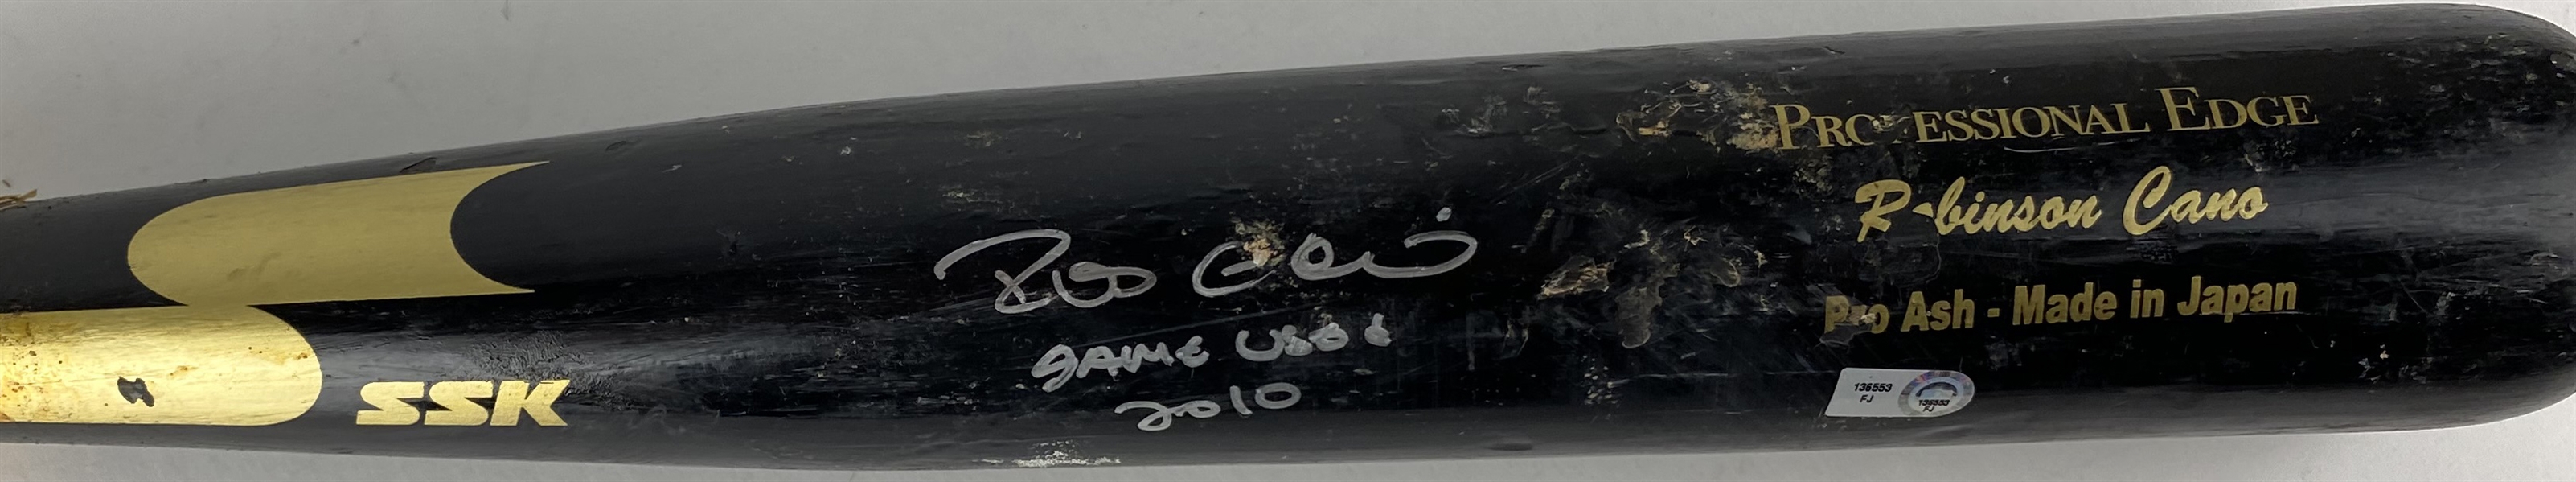 Robinson Cano Game Used & Signed 2010 SSK Baseball Bat - PSA/DNA GU 10!